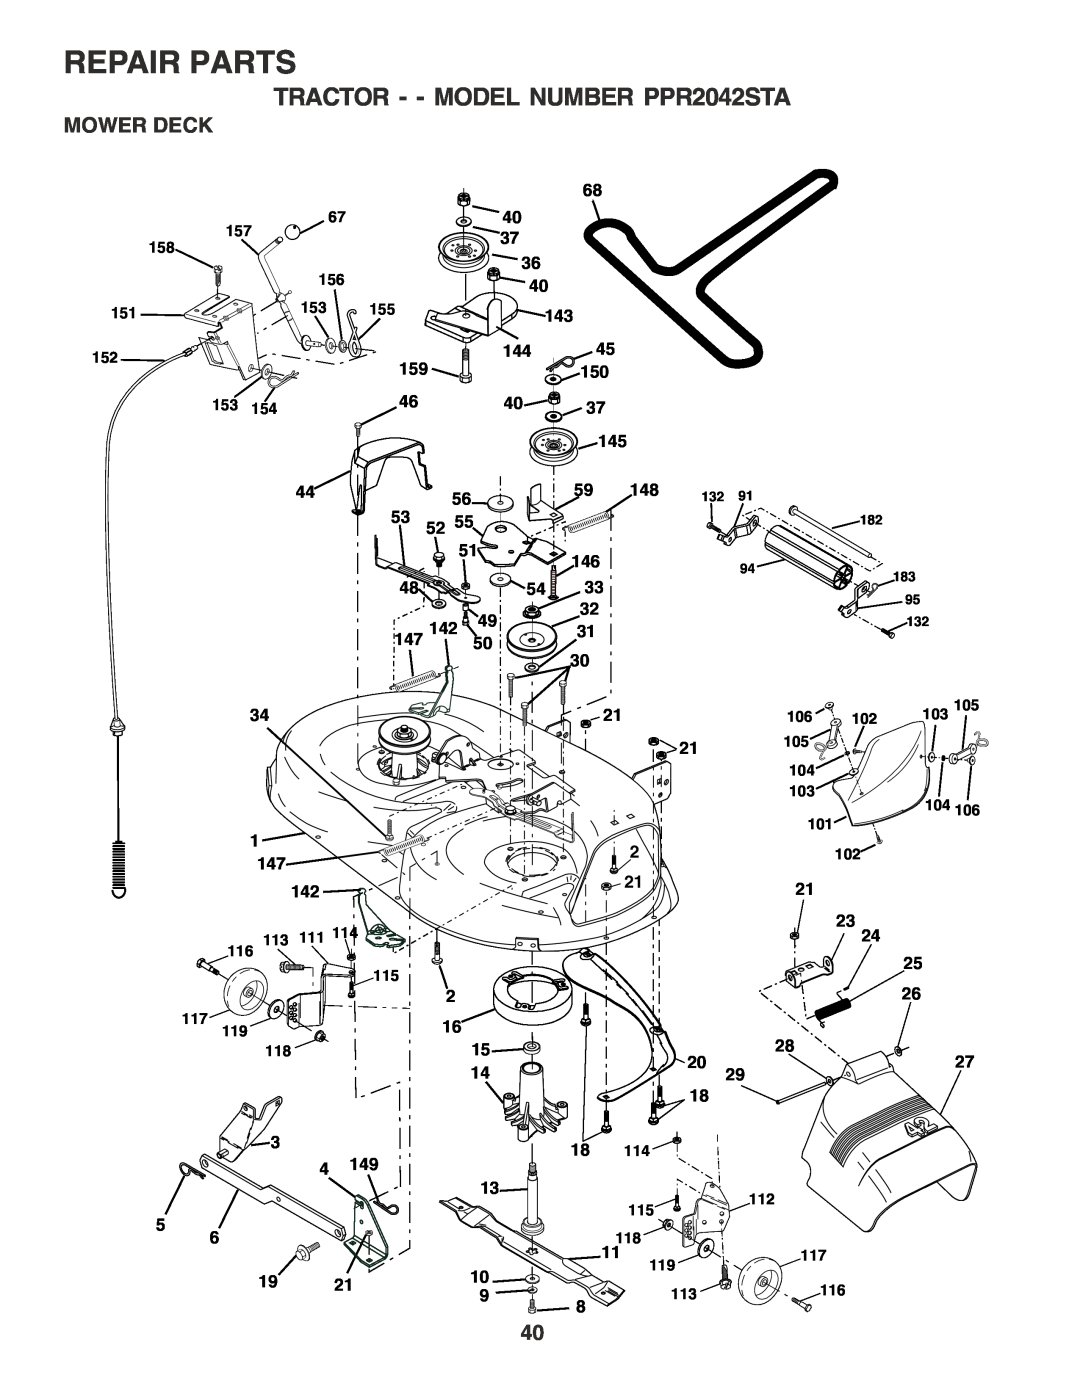 Poulan 181377 owner manual Mower Deck, Repair Parts, TRACTOR - - MODEL NUMBER PPR2042STA 